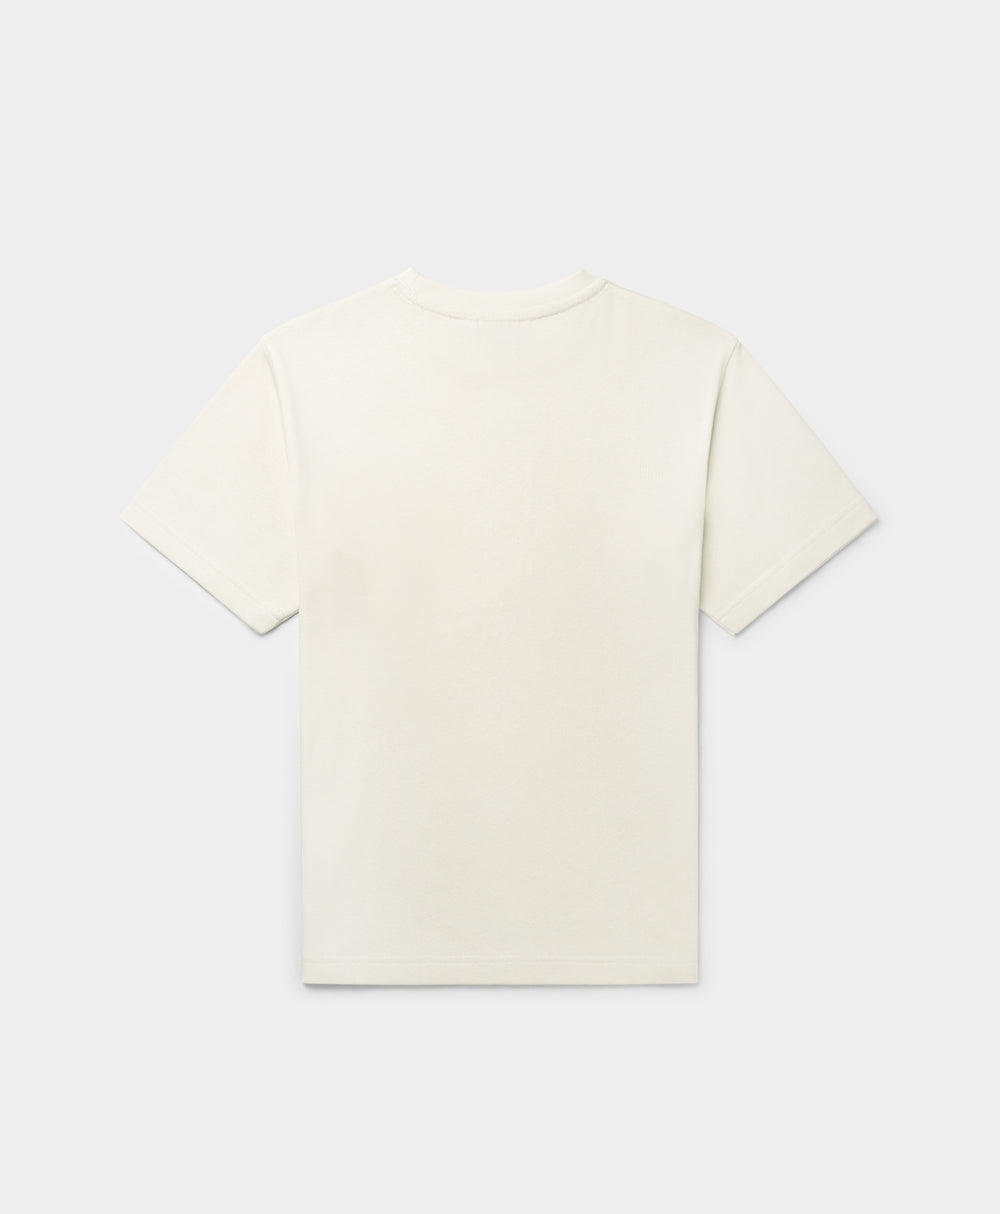 DP - Pristine White Knit T-Shirt - Packshot - Rear